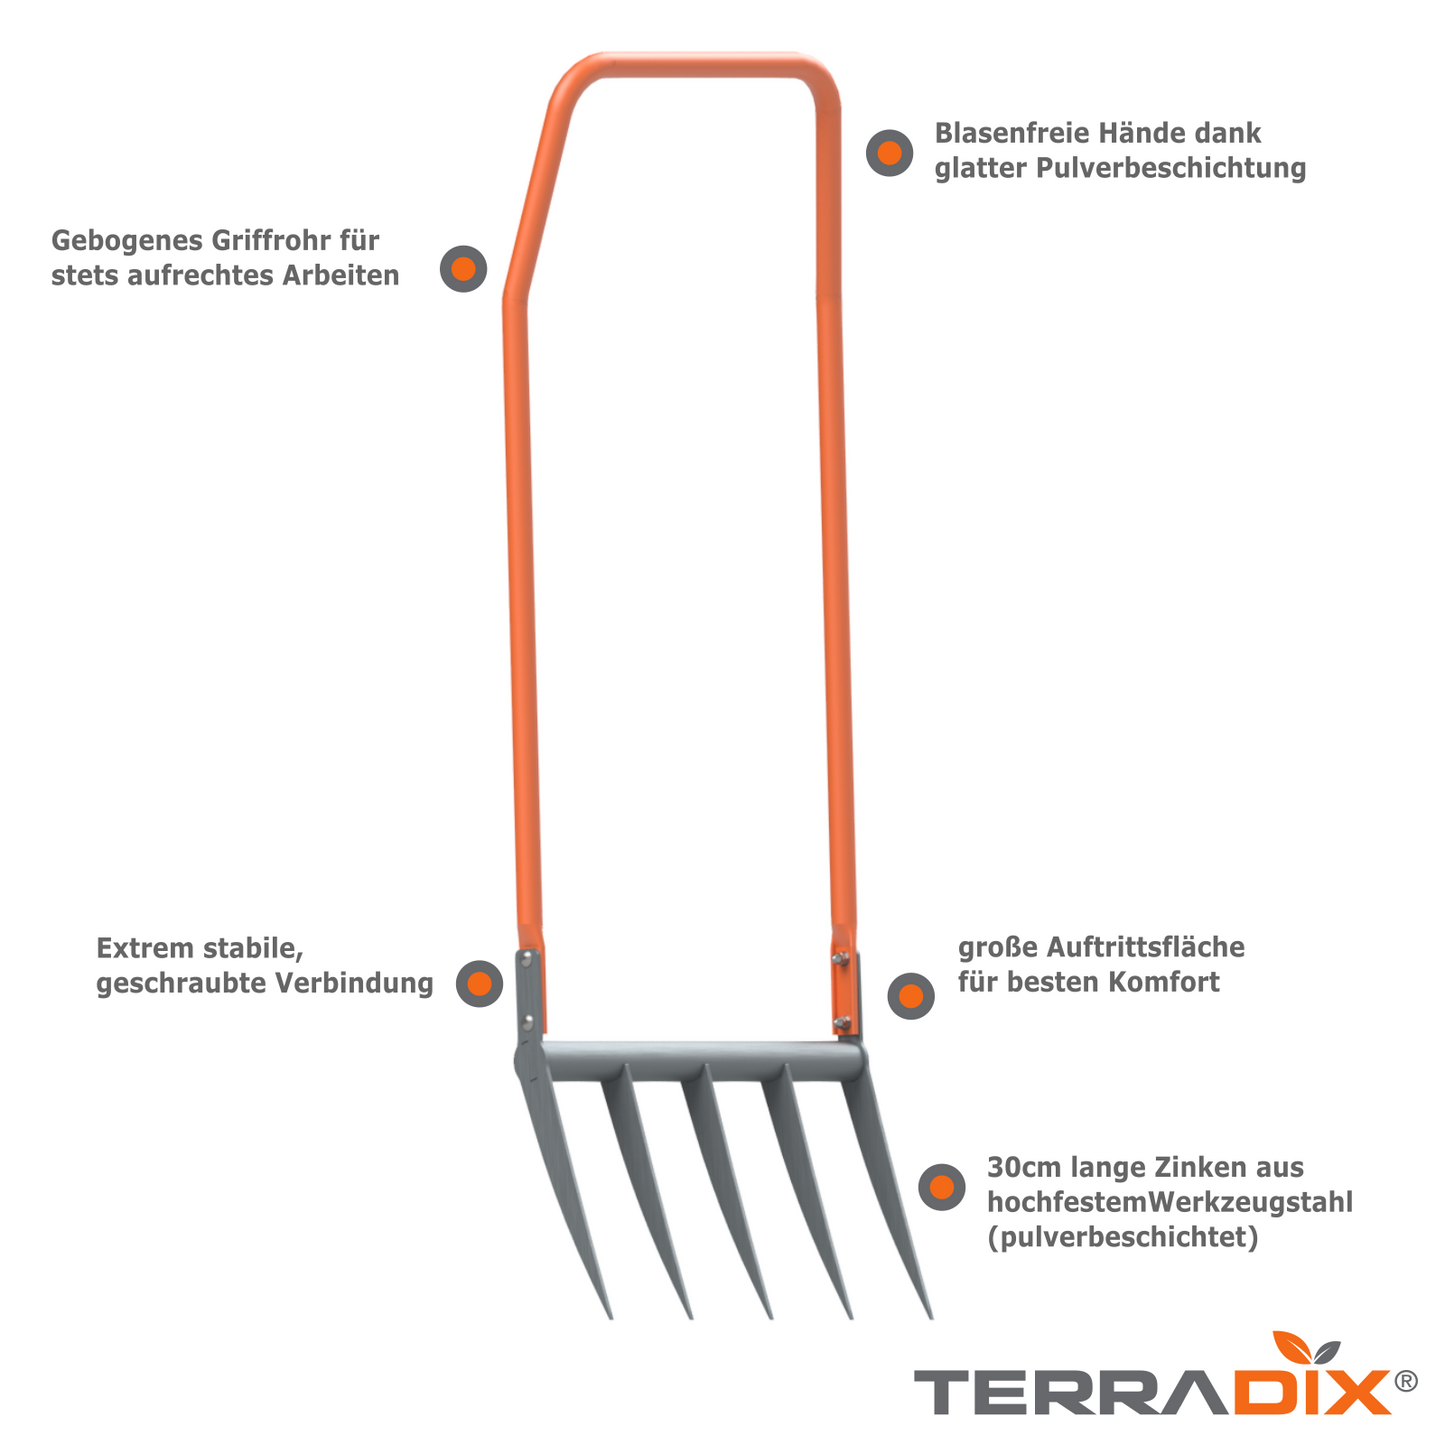 
                  
                    Grabegabel Terradix® Broadfork 5x300 Pro
                  
                